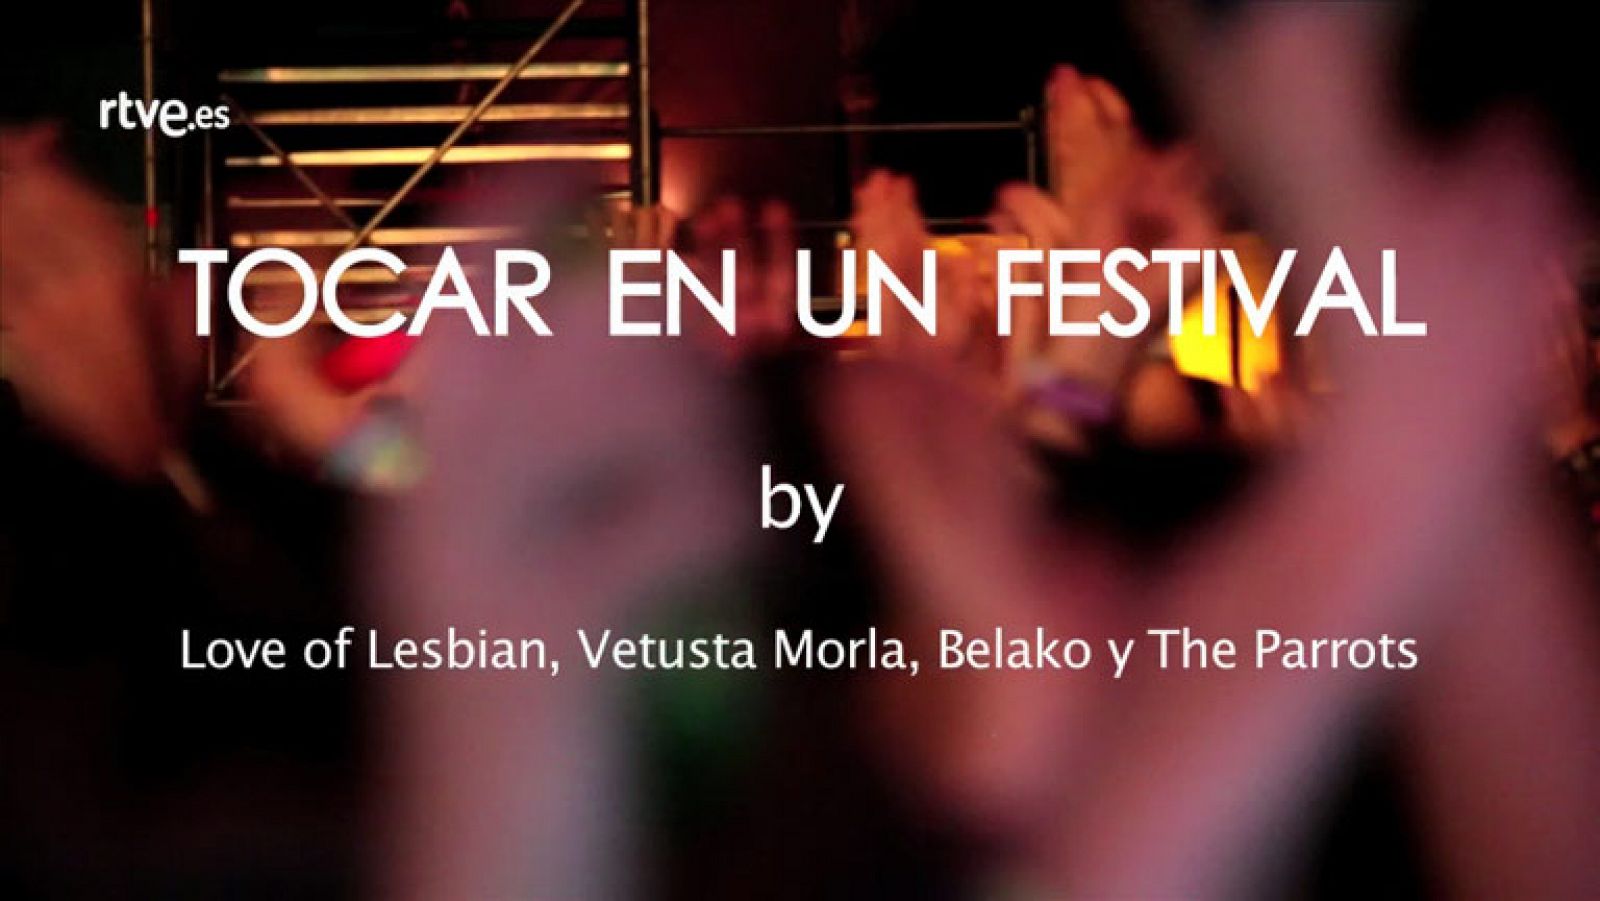 "Tocar en un festival", by Love of Lesbian, Vetusta Morla, Belako, The Parrots